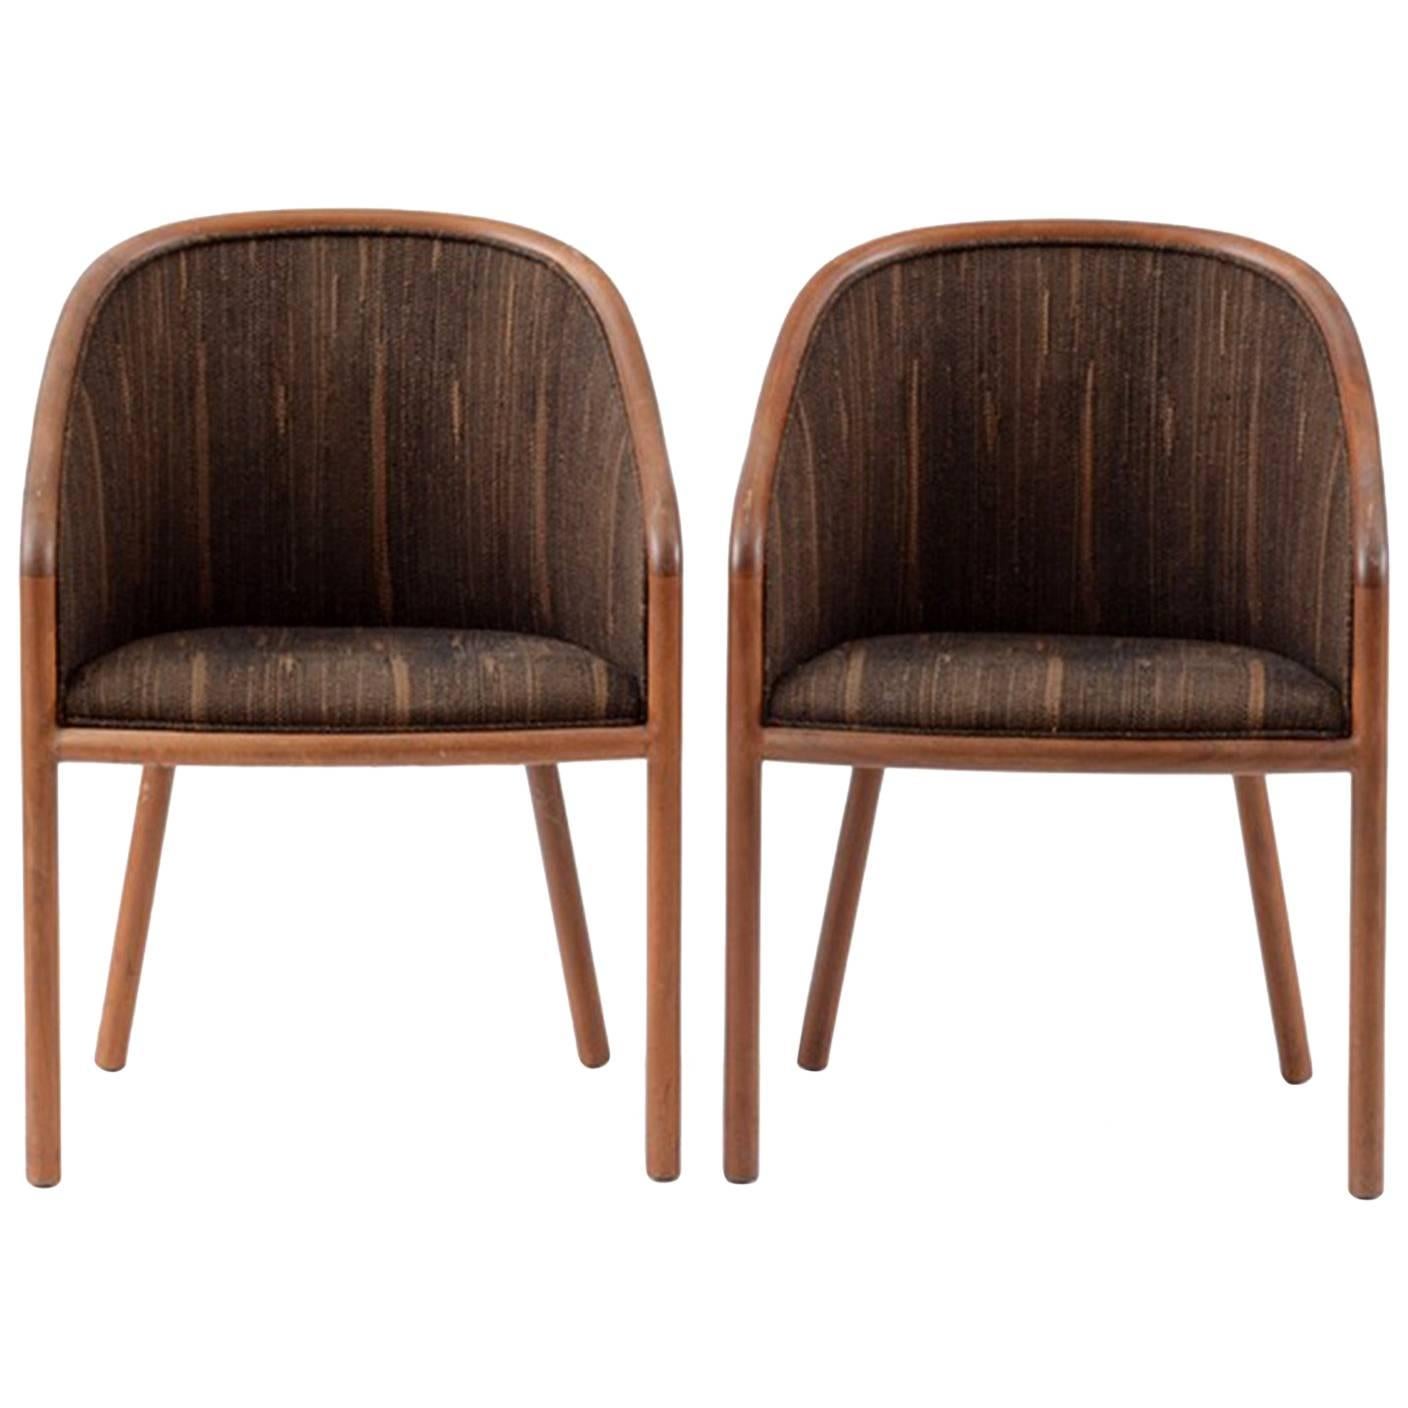 Pair of Elegant Teak Side Chairs For Sale